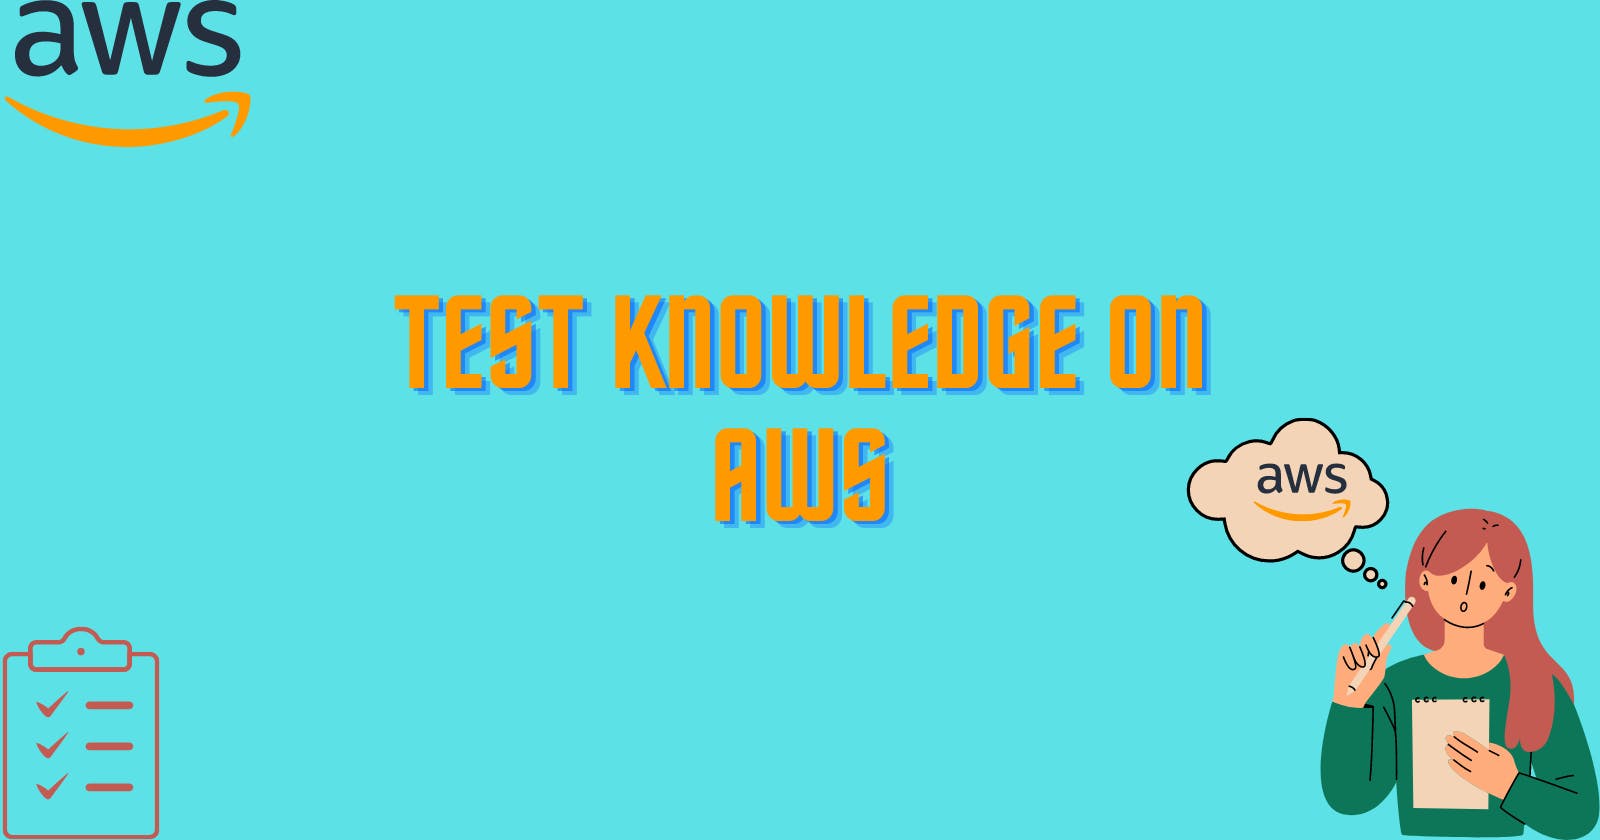 Test Knowledge on AWS